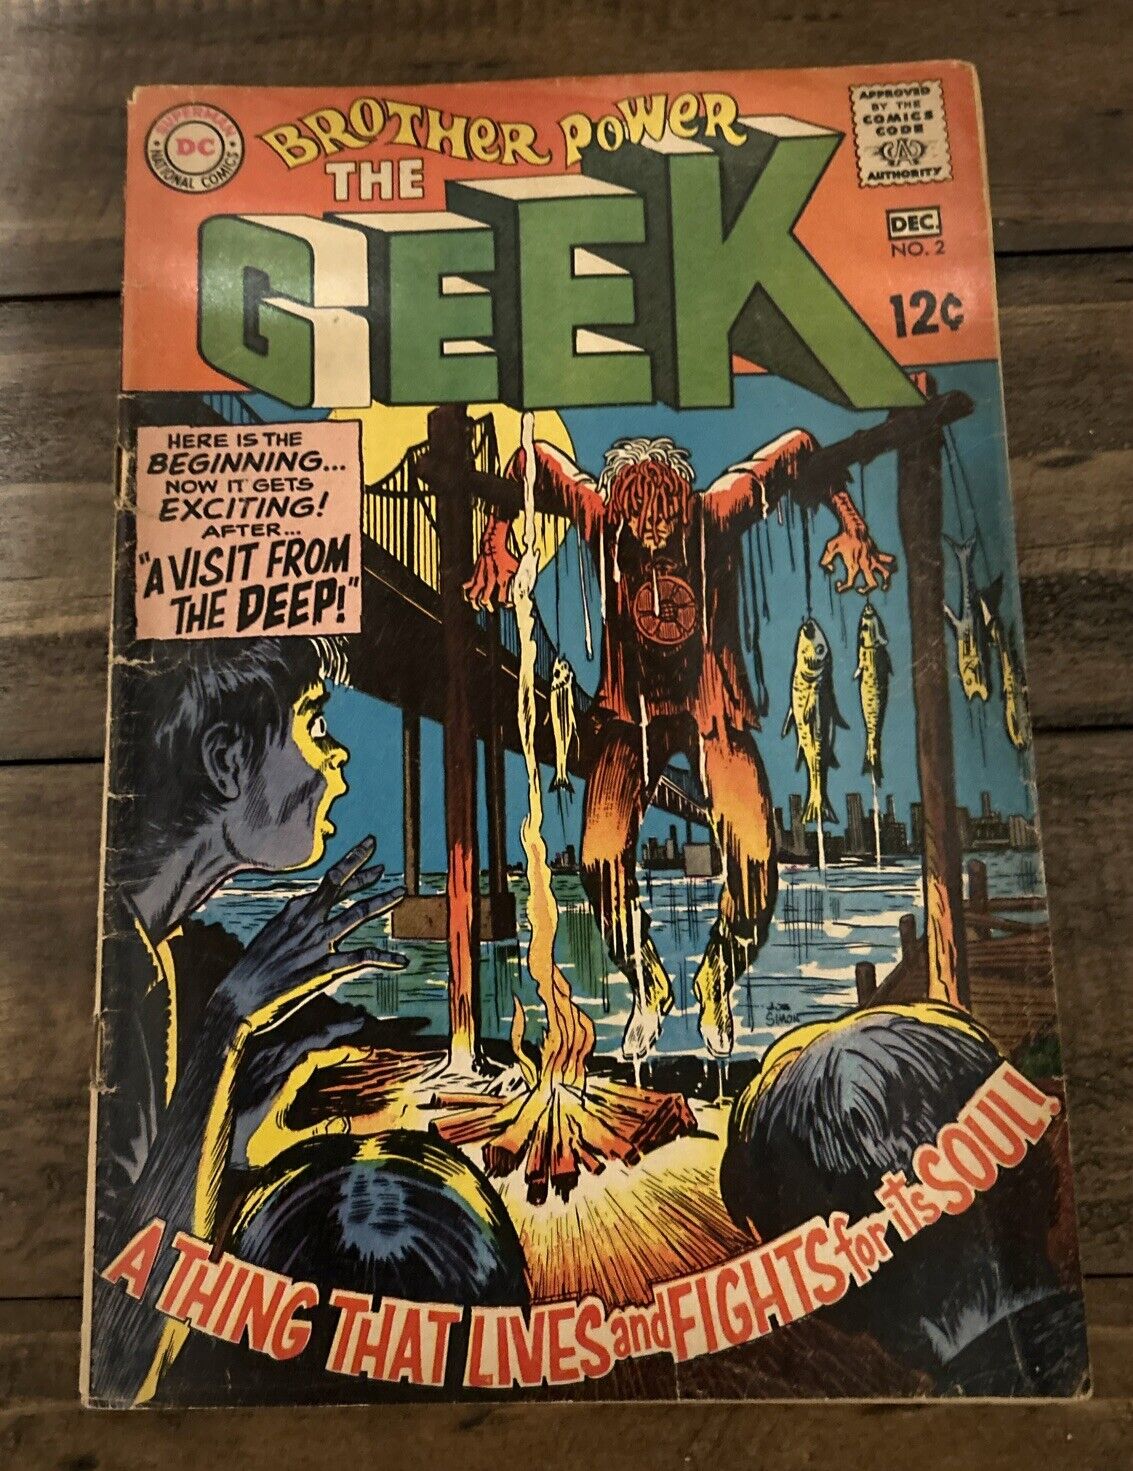 Brother Power, the Geek #2, December 1968 DC Comics